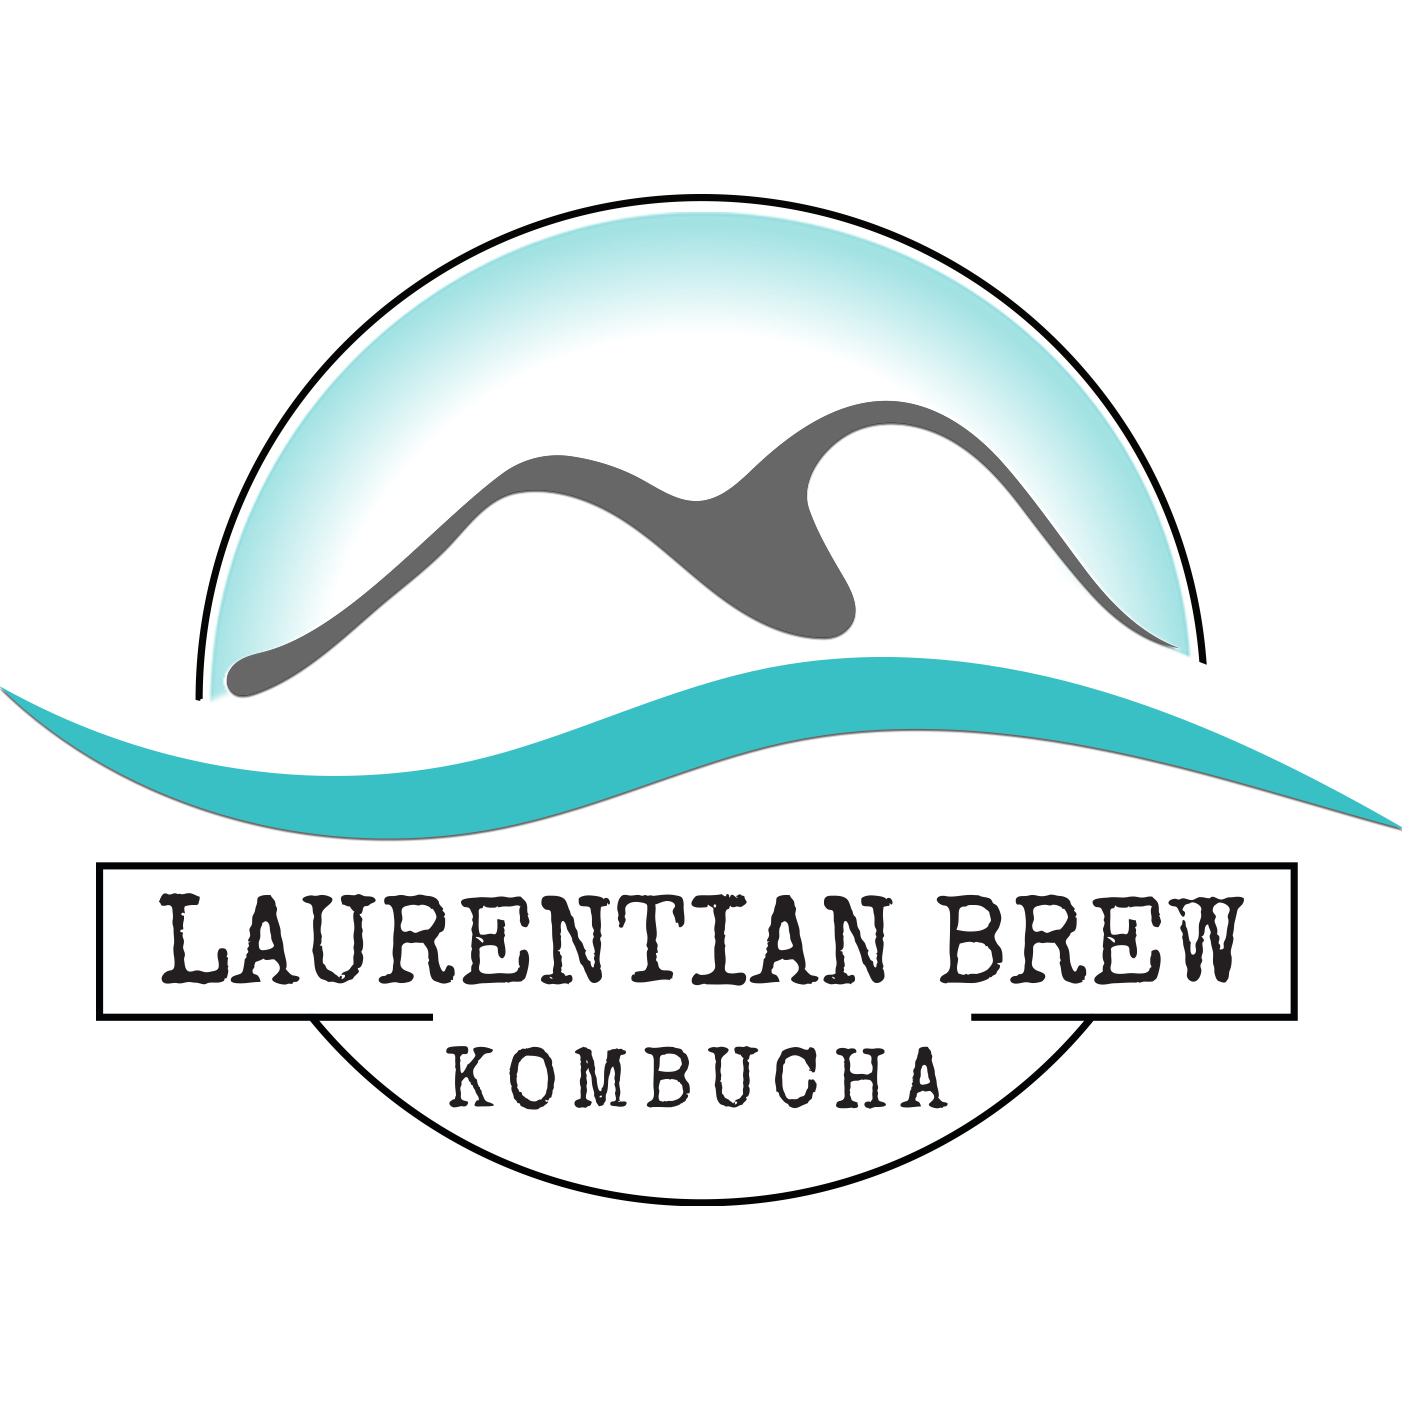 Laurentian Brew Kombucha Company